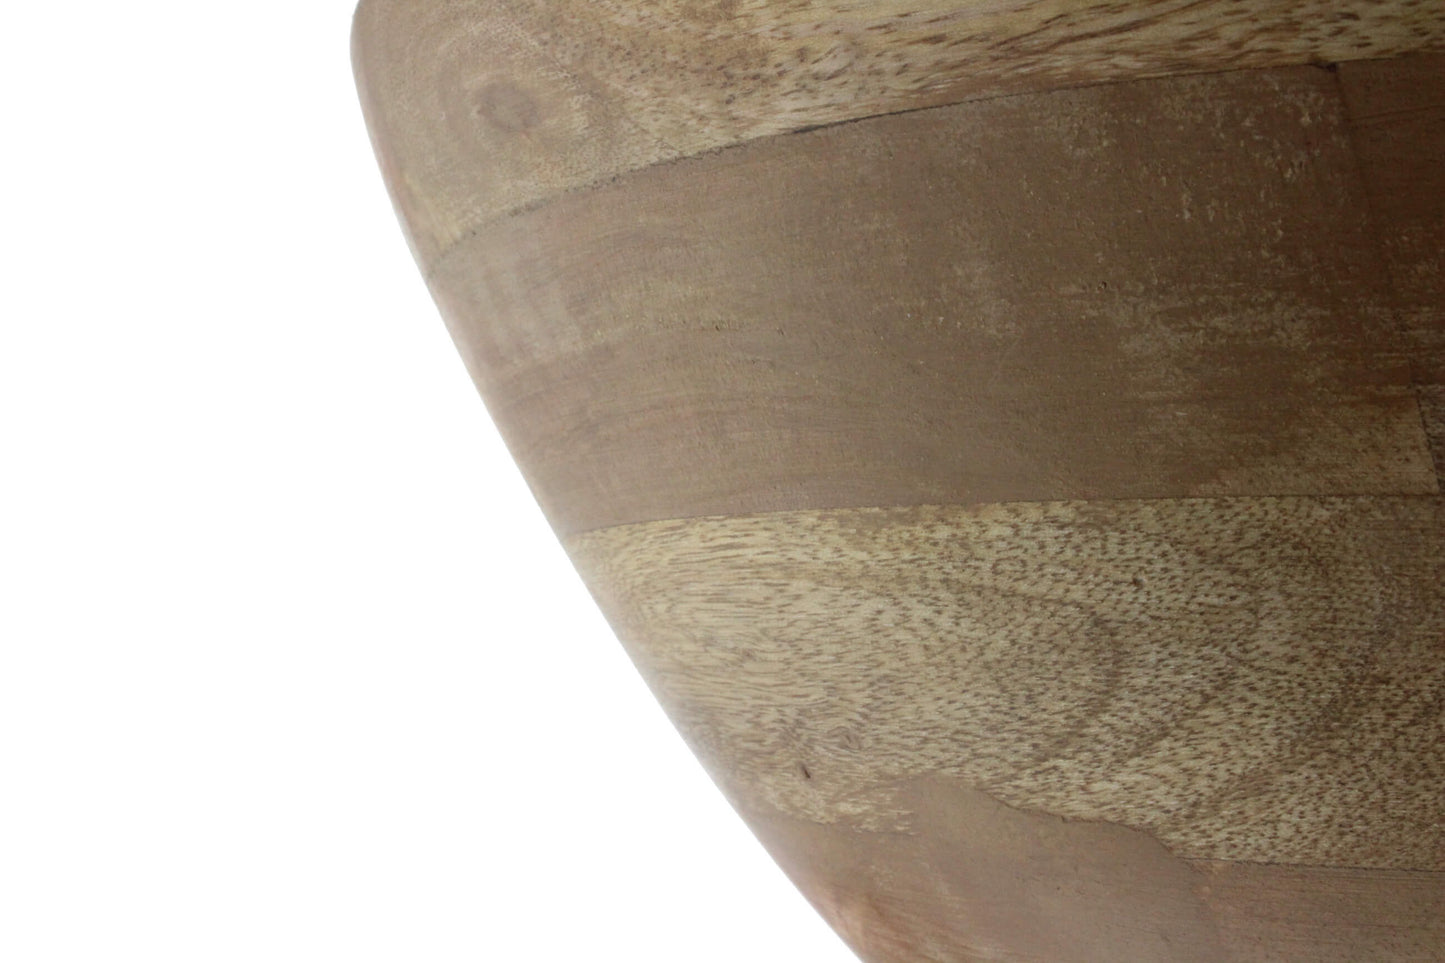 Schale aus Mangoholz mit Emaillebeschichtung in Natur/Gold Ø25cm Salatschüssel Schale Dekoschale